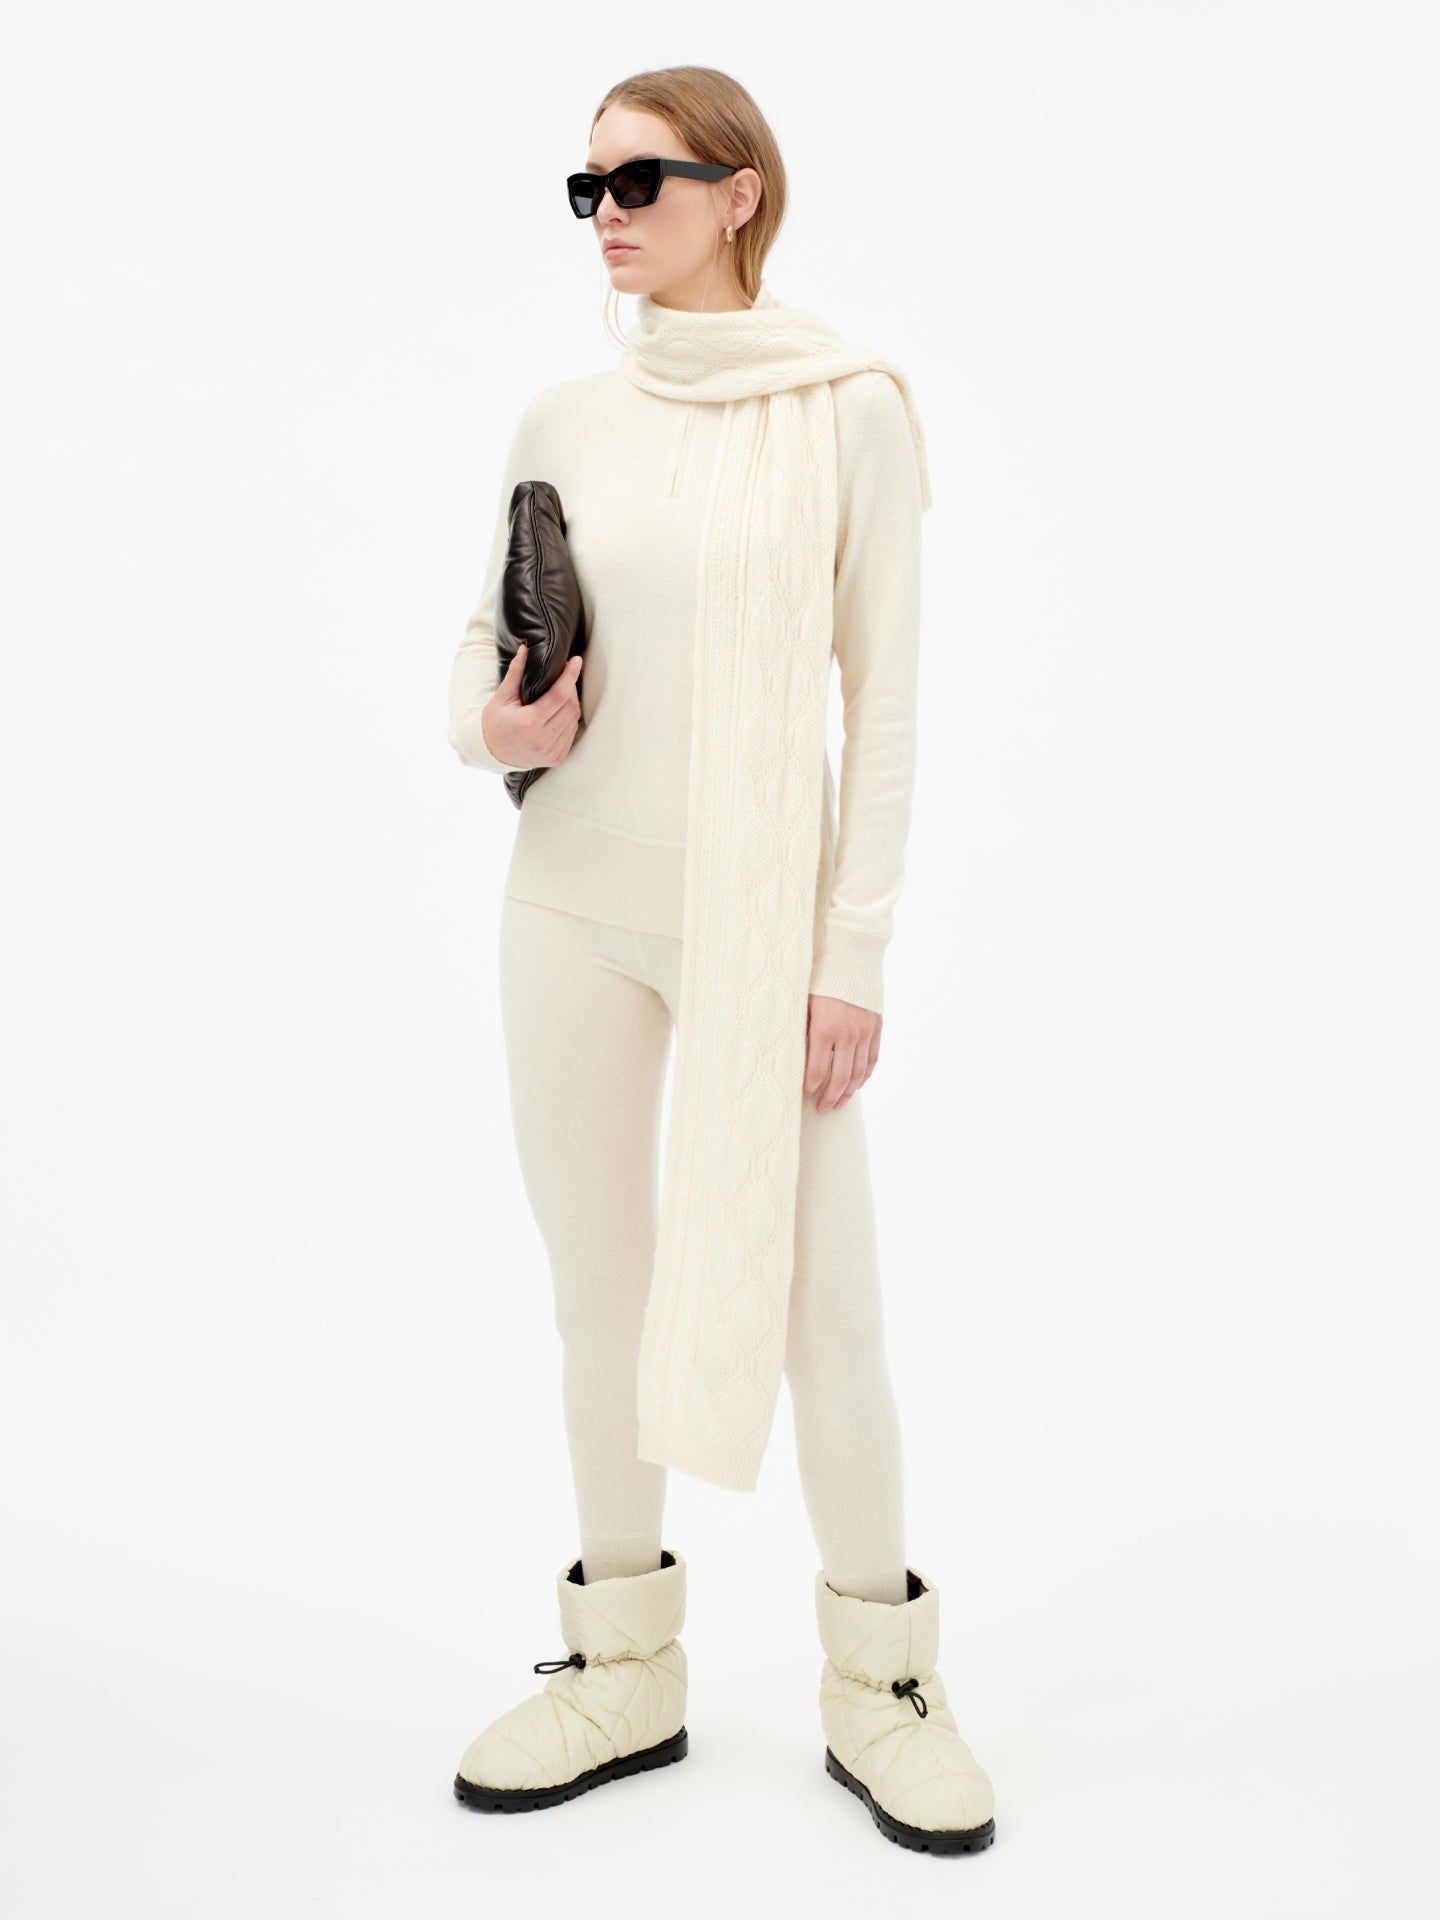 Damen Kaschmir Hochgeschlossener Pullover Mit Reißverschluss Gebrochenes Weiß - Gobi Cashmere